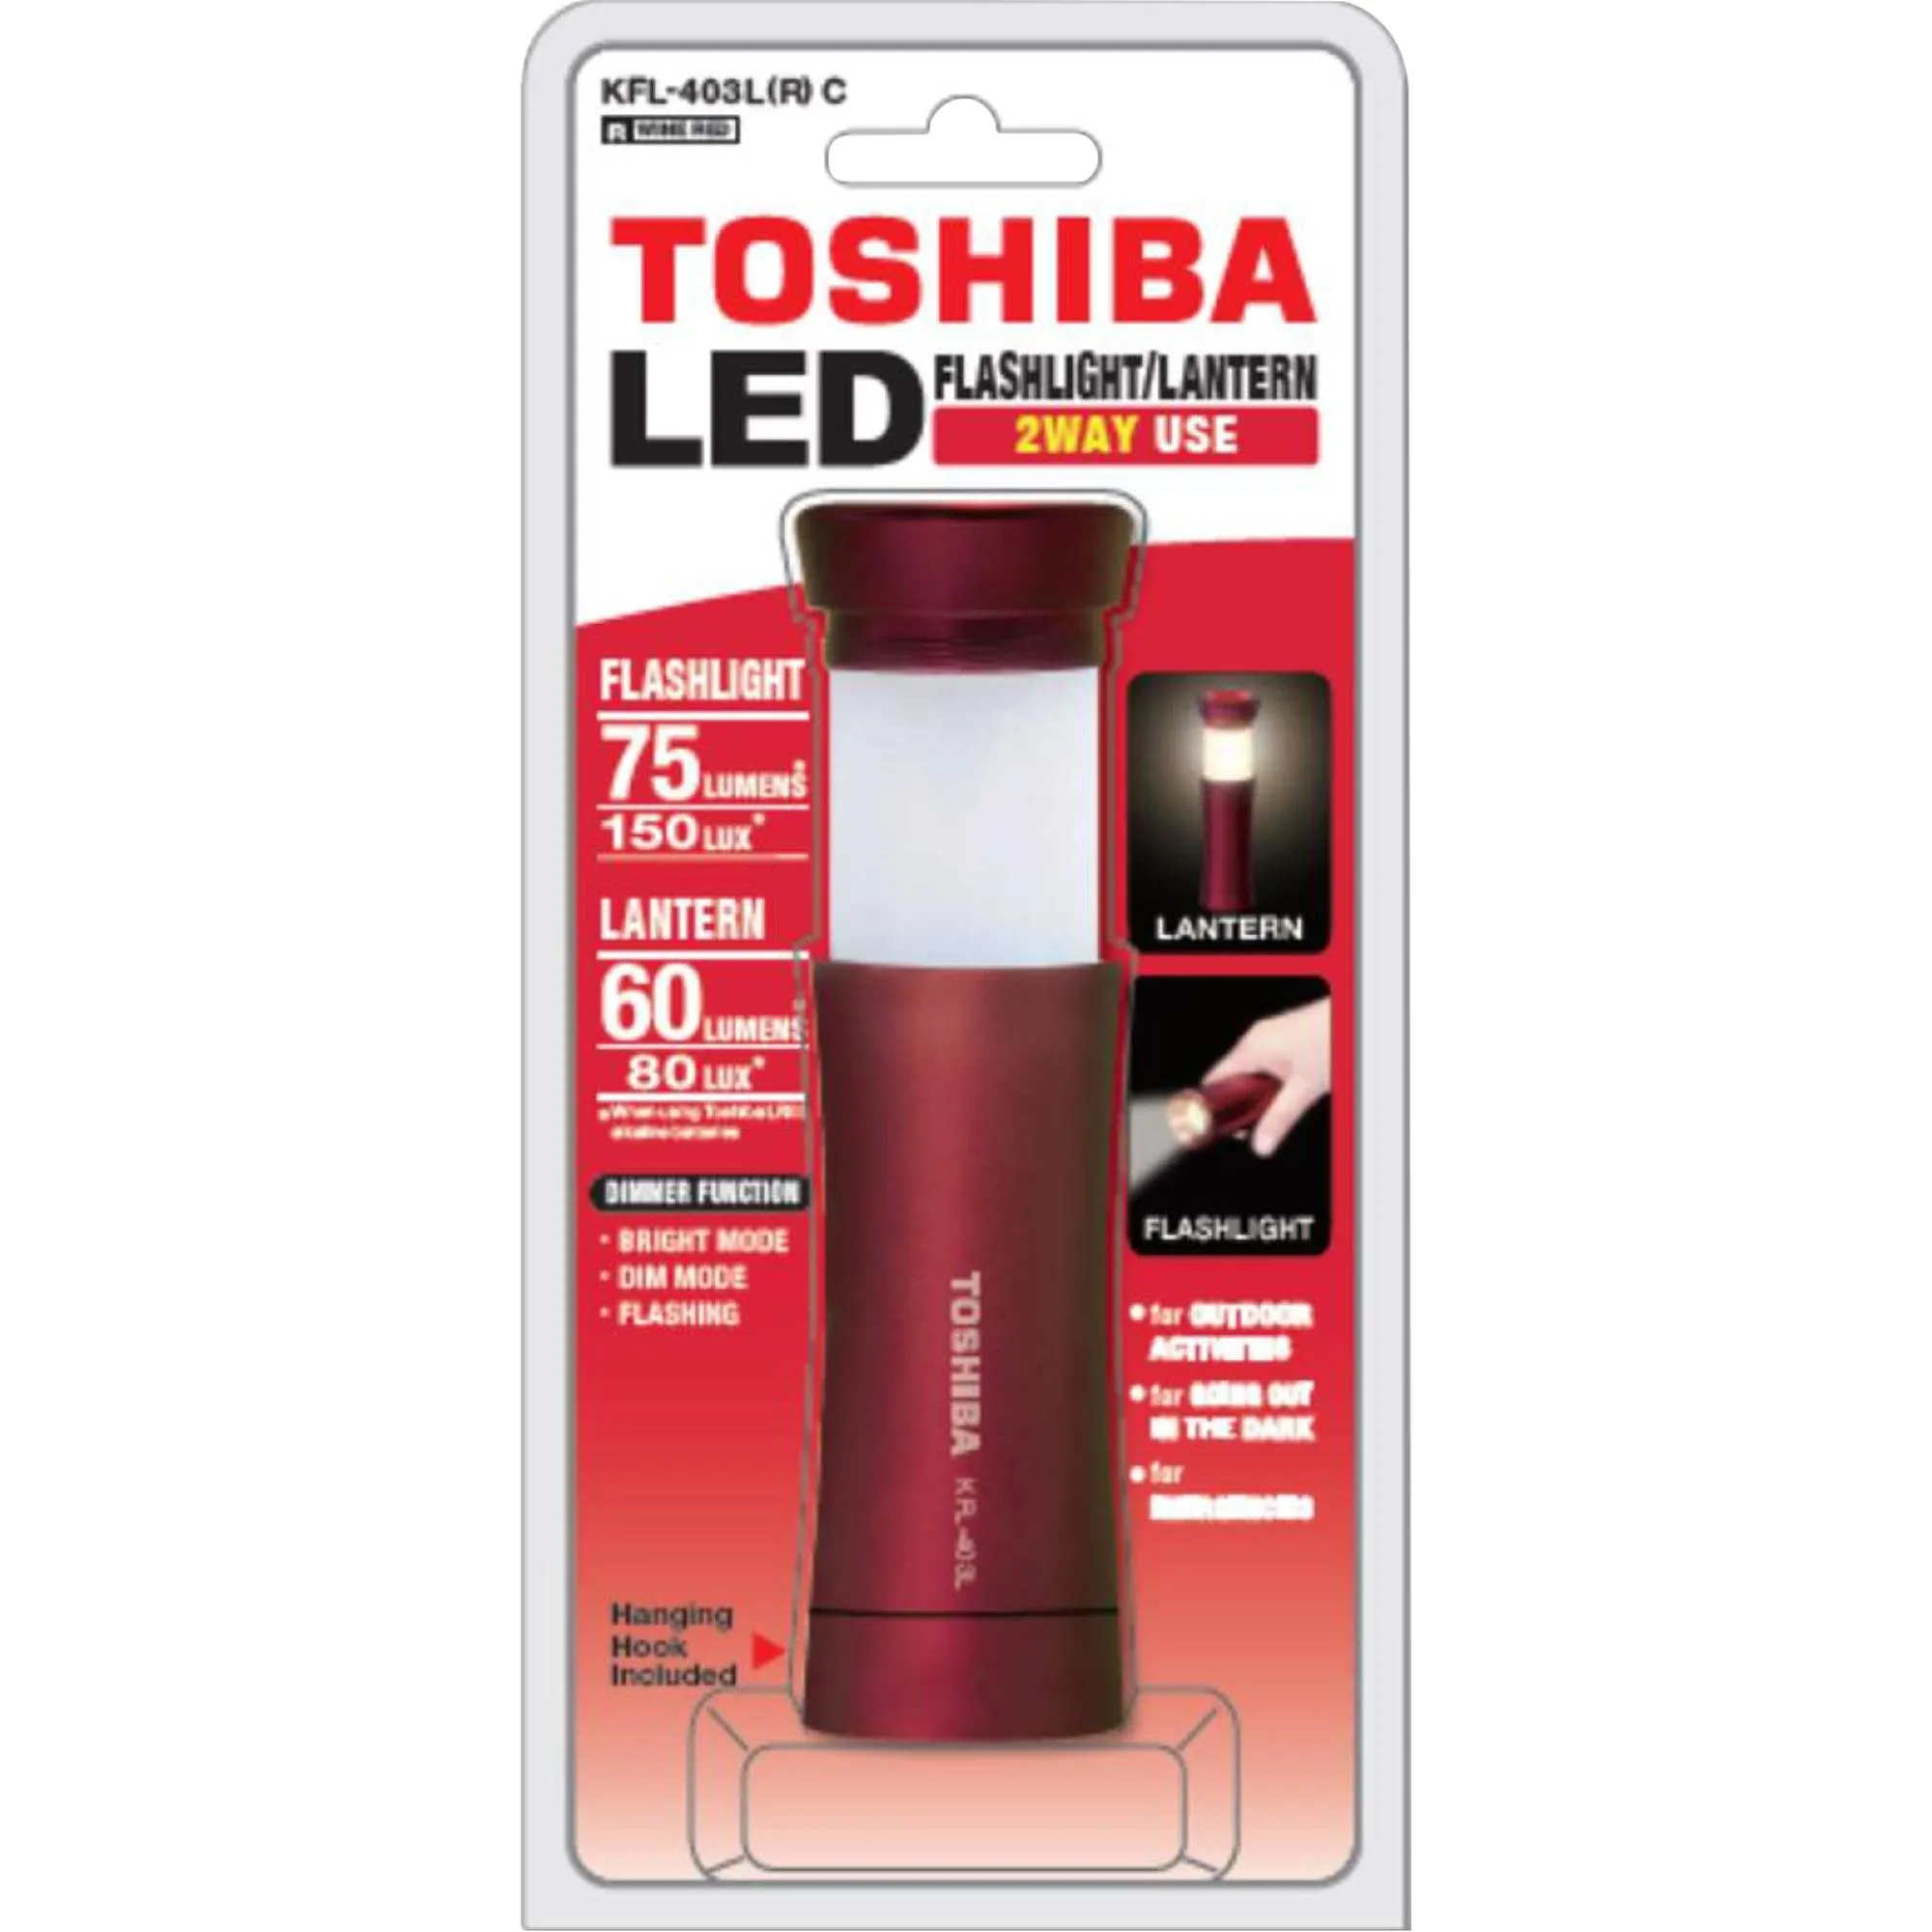 Lanterna Toshiba 2WAY KFL-403L Vermelha (83803)